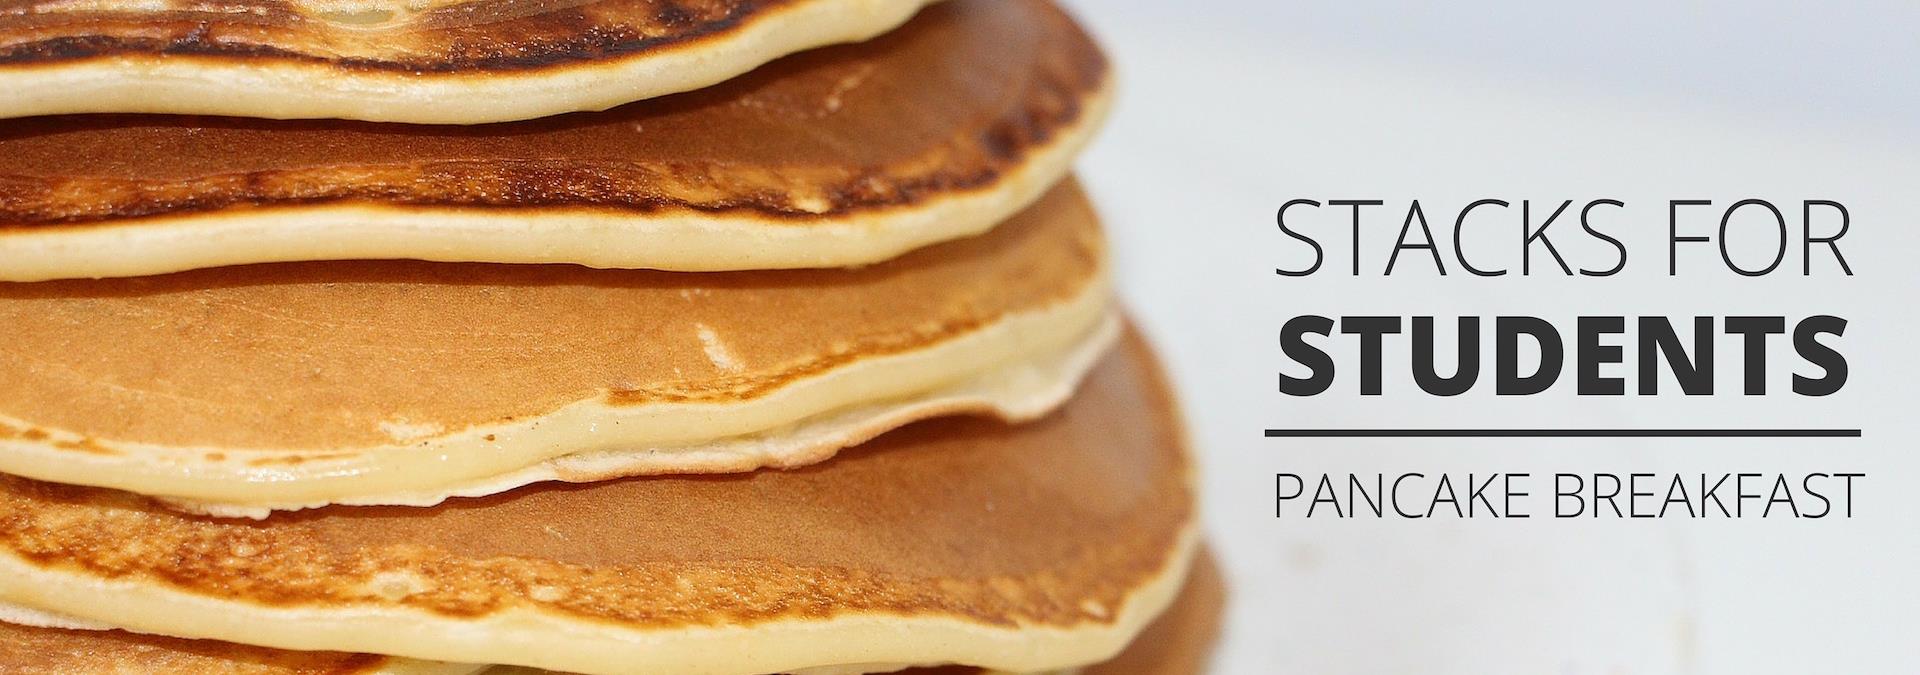 Stacks for Students Pancake Breakfast